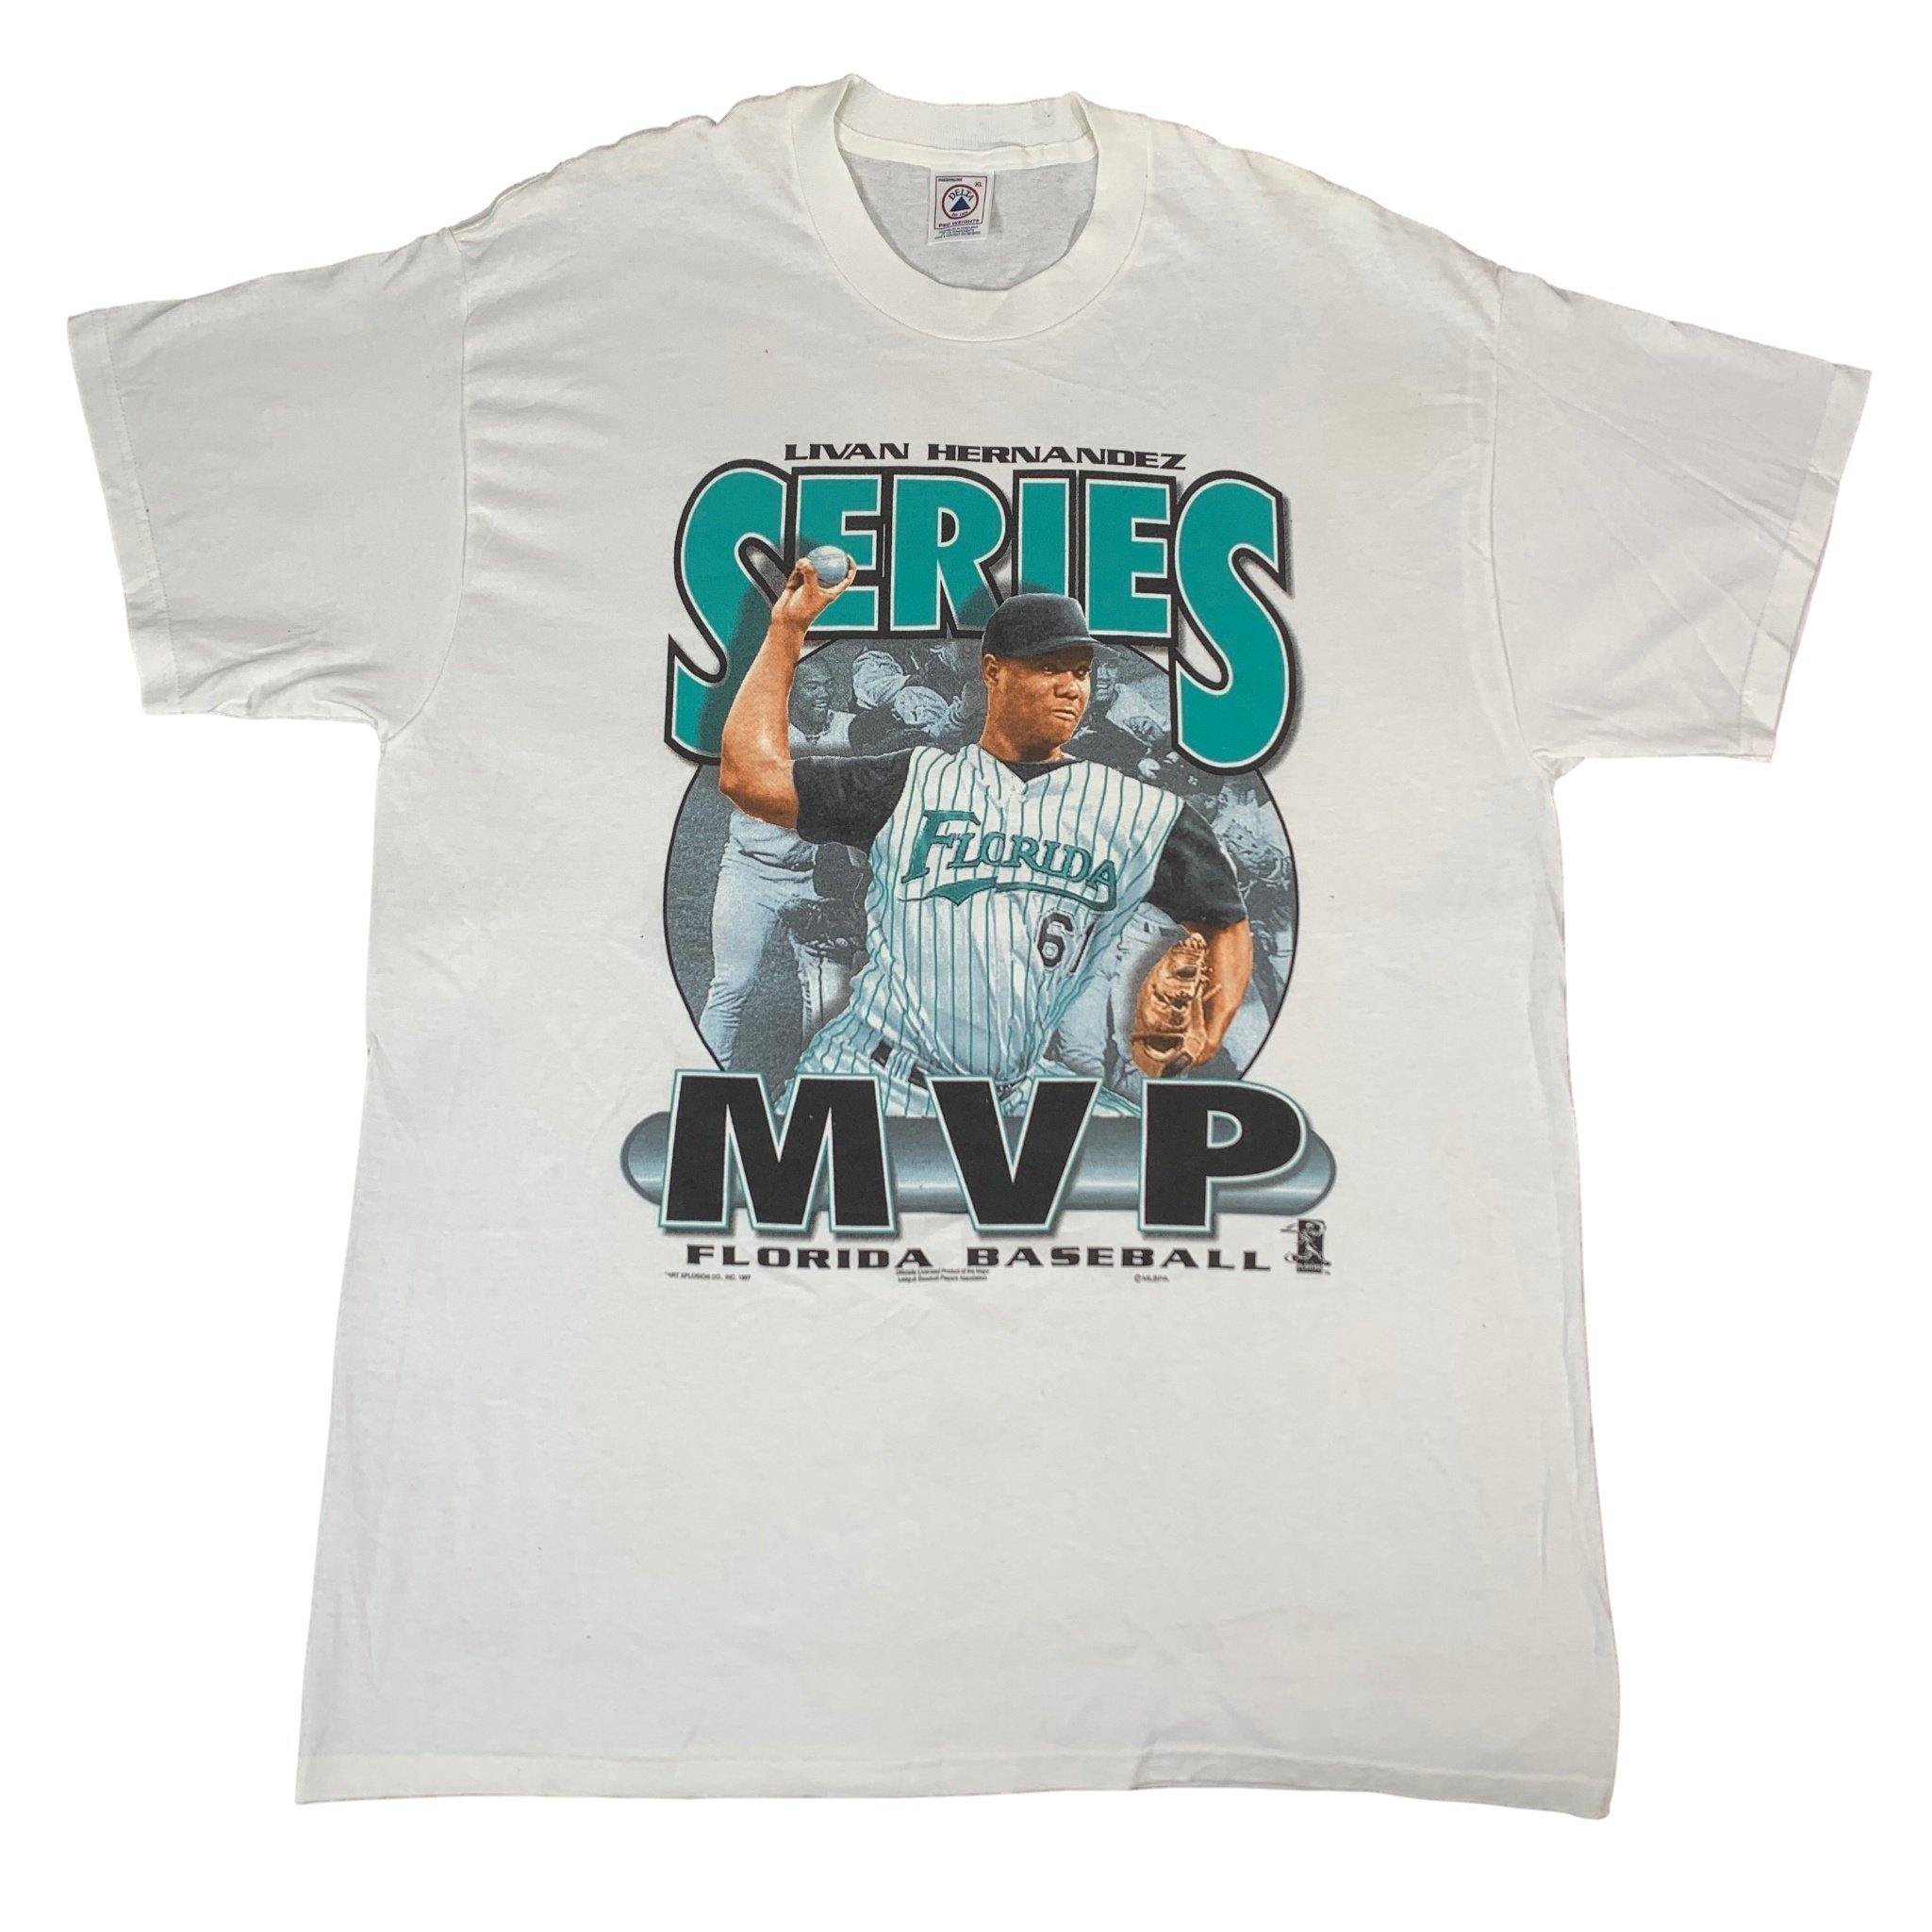 Vintage Florida Marlins Baseball National Champions 2003 T-Shirt by Lee